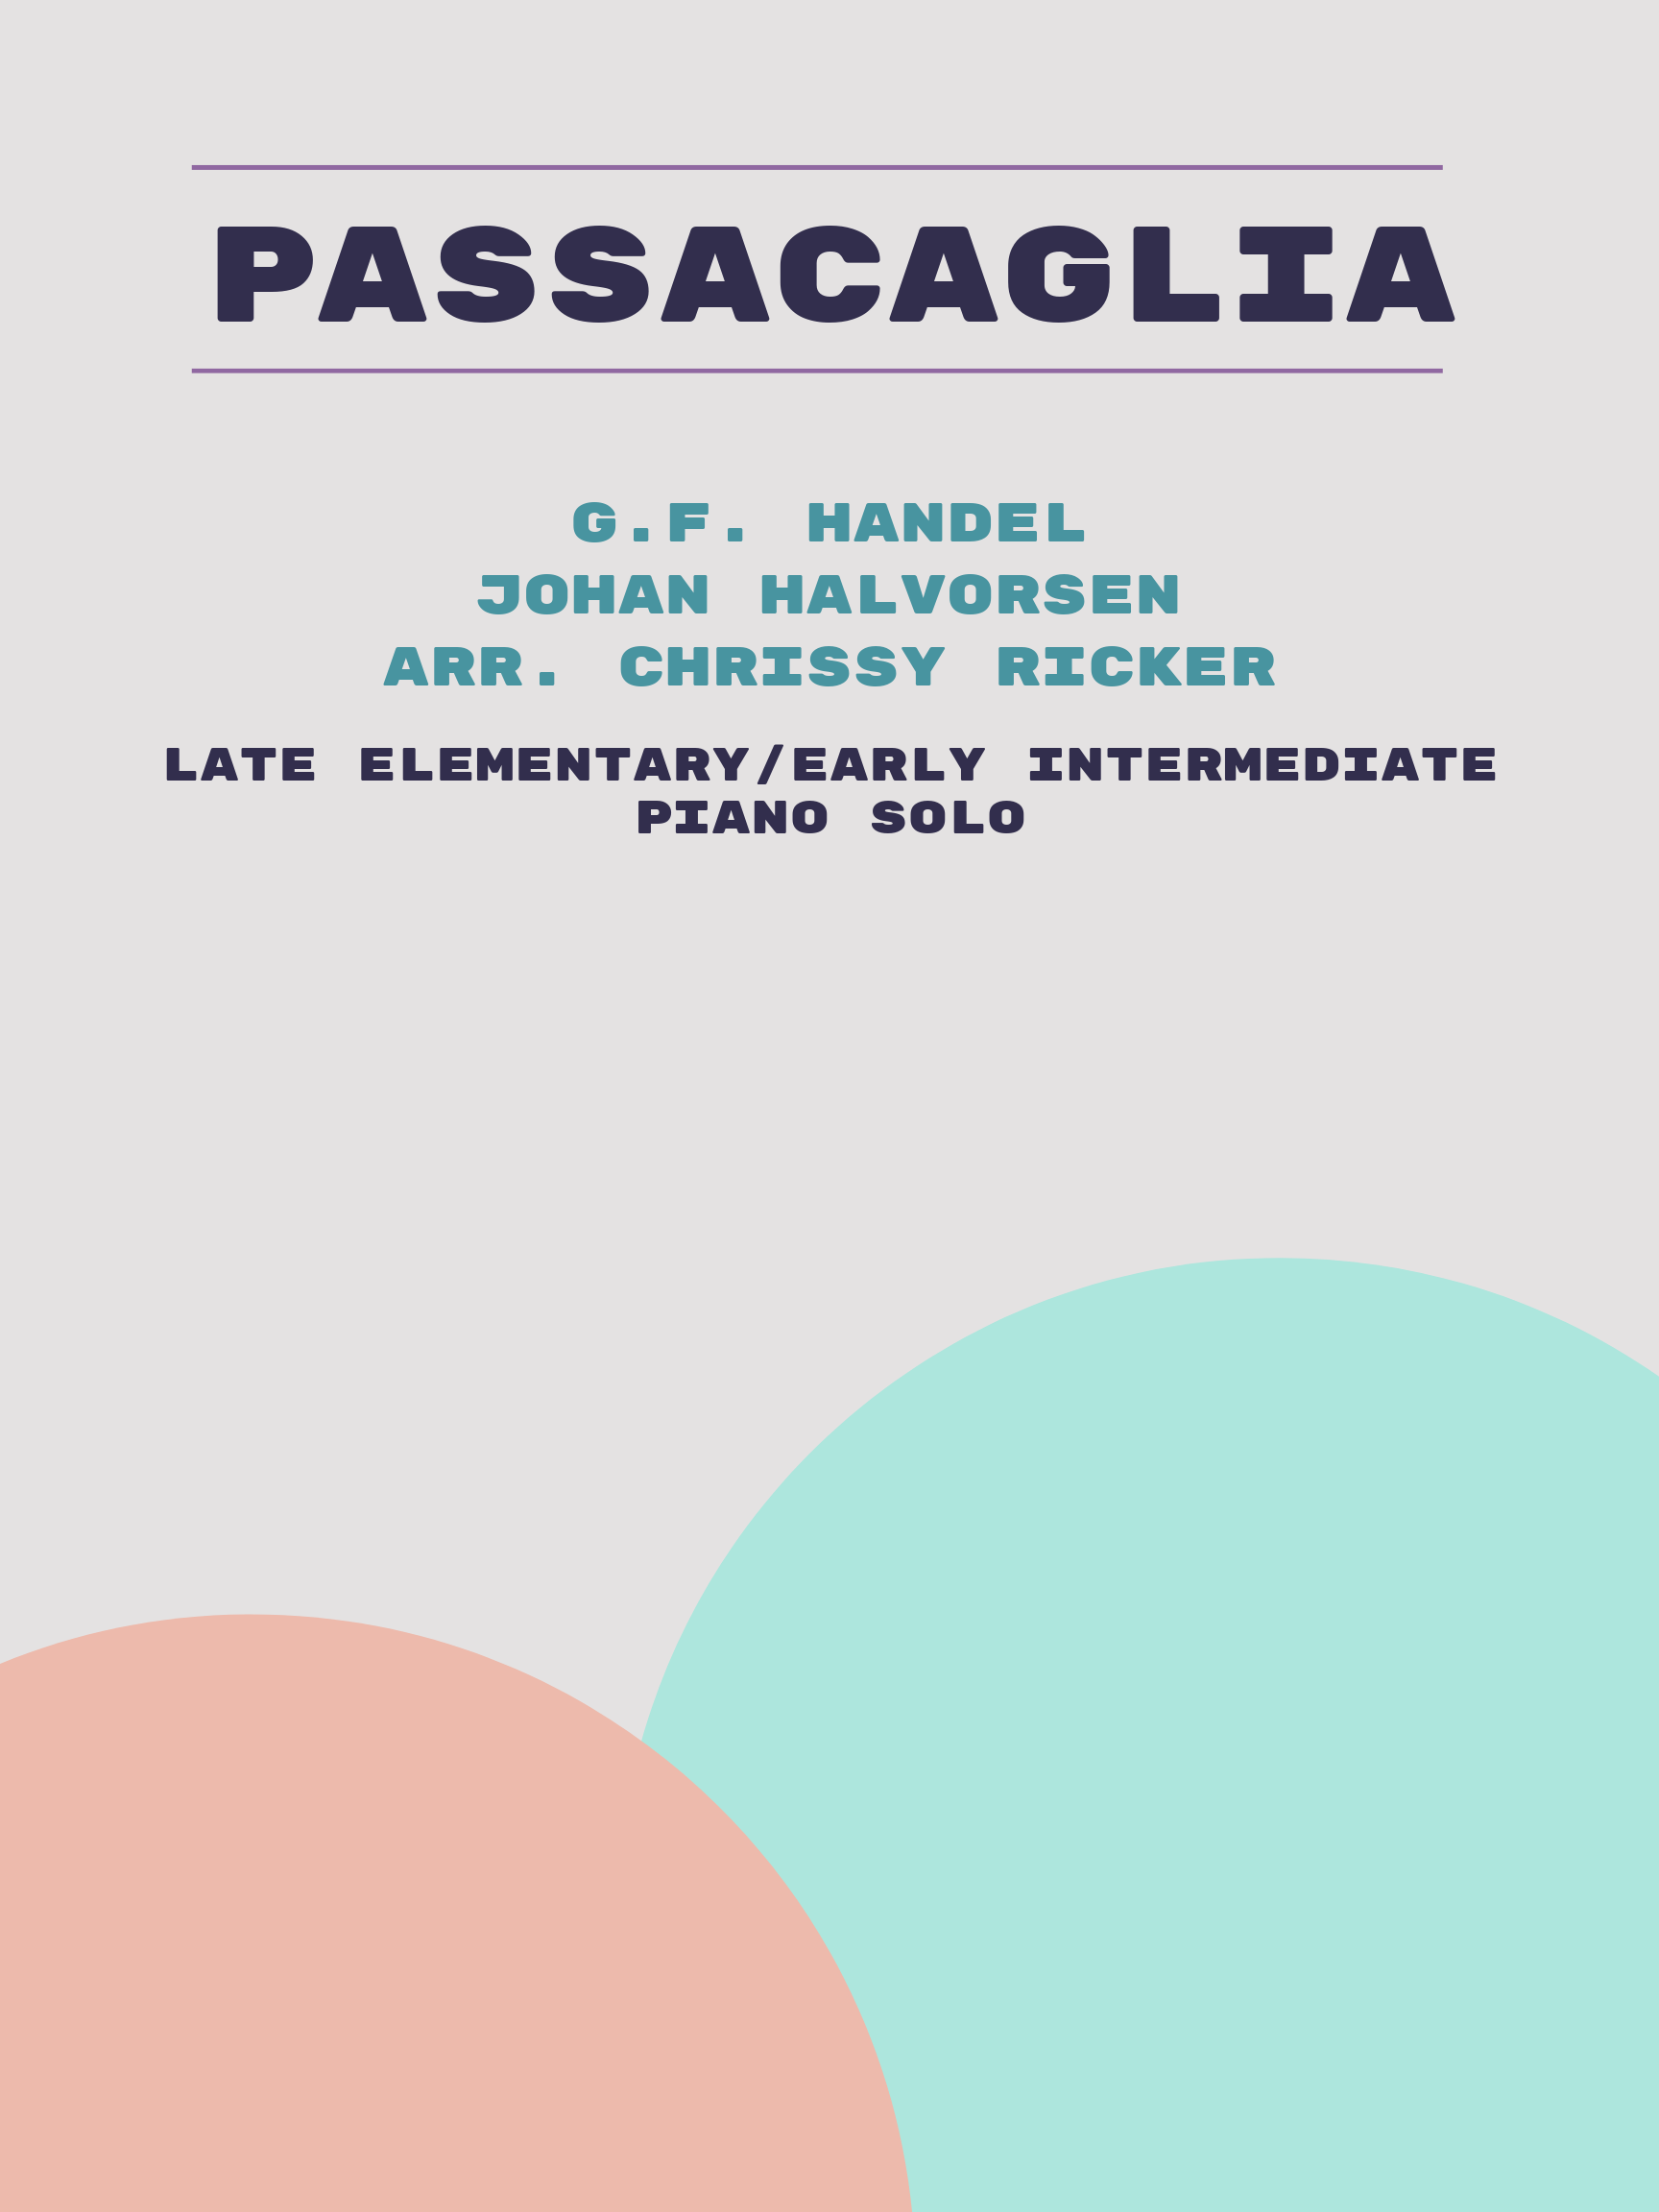 Passacaglia by G.F. Handel, Johan Halvorsen